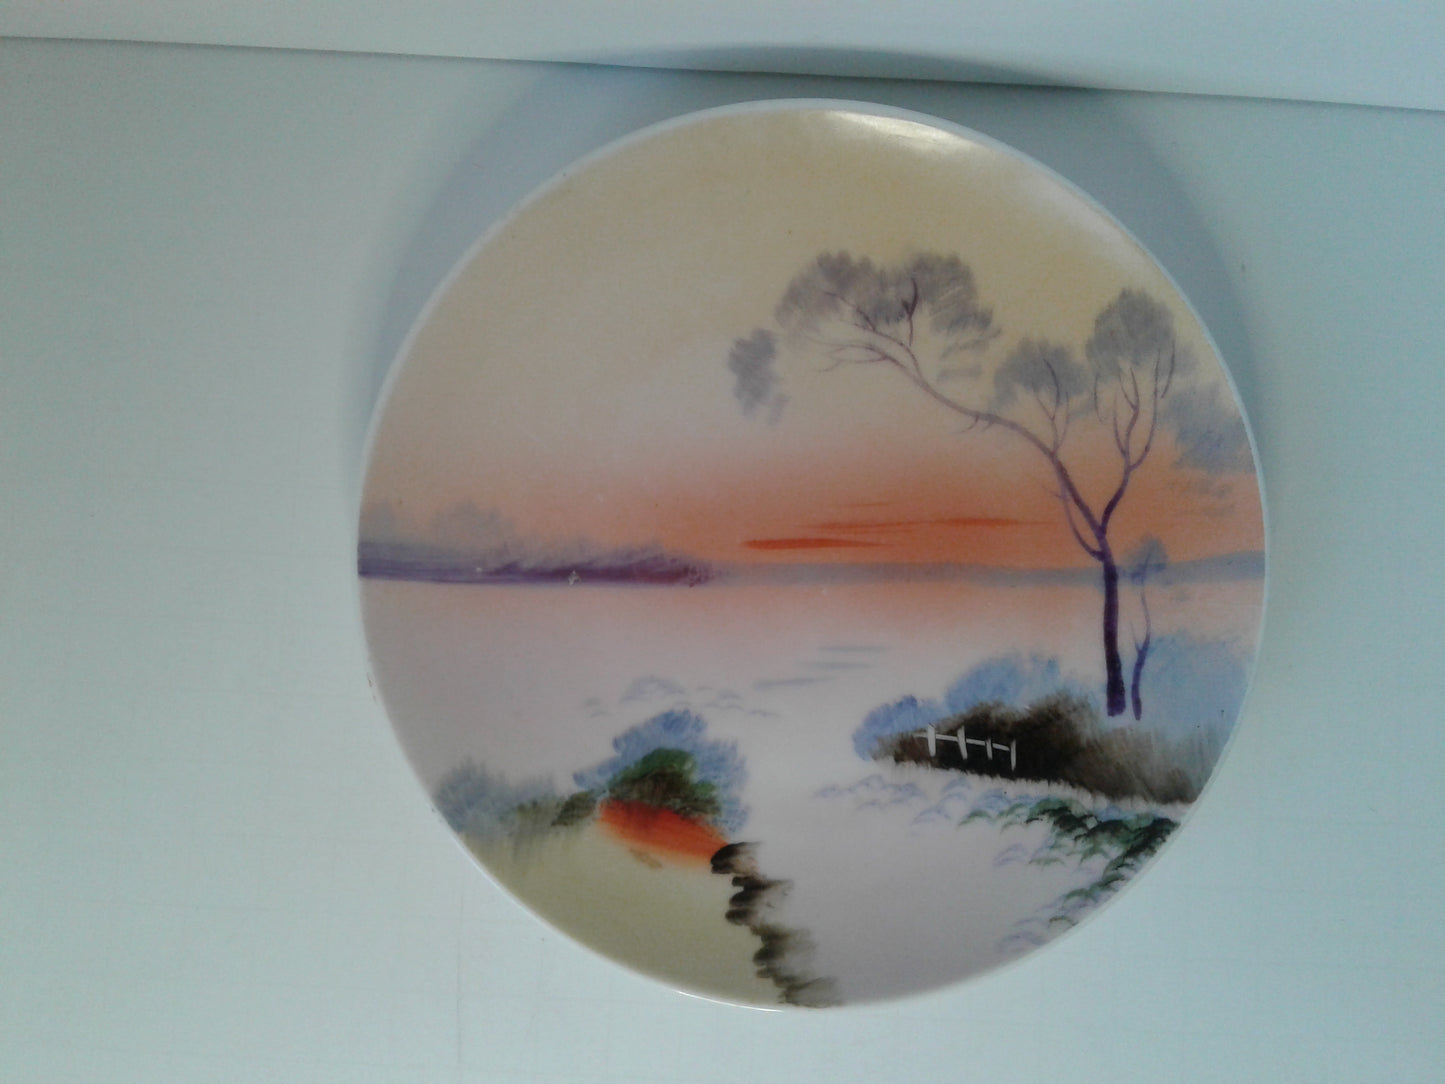 Meito China Decorative Plate